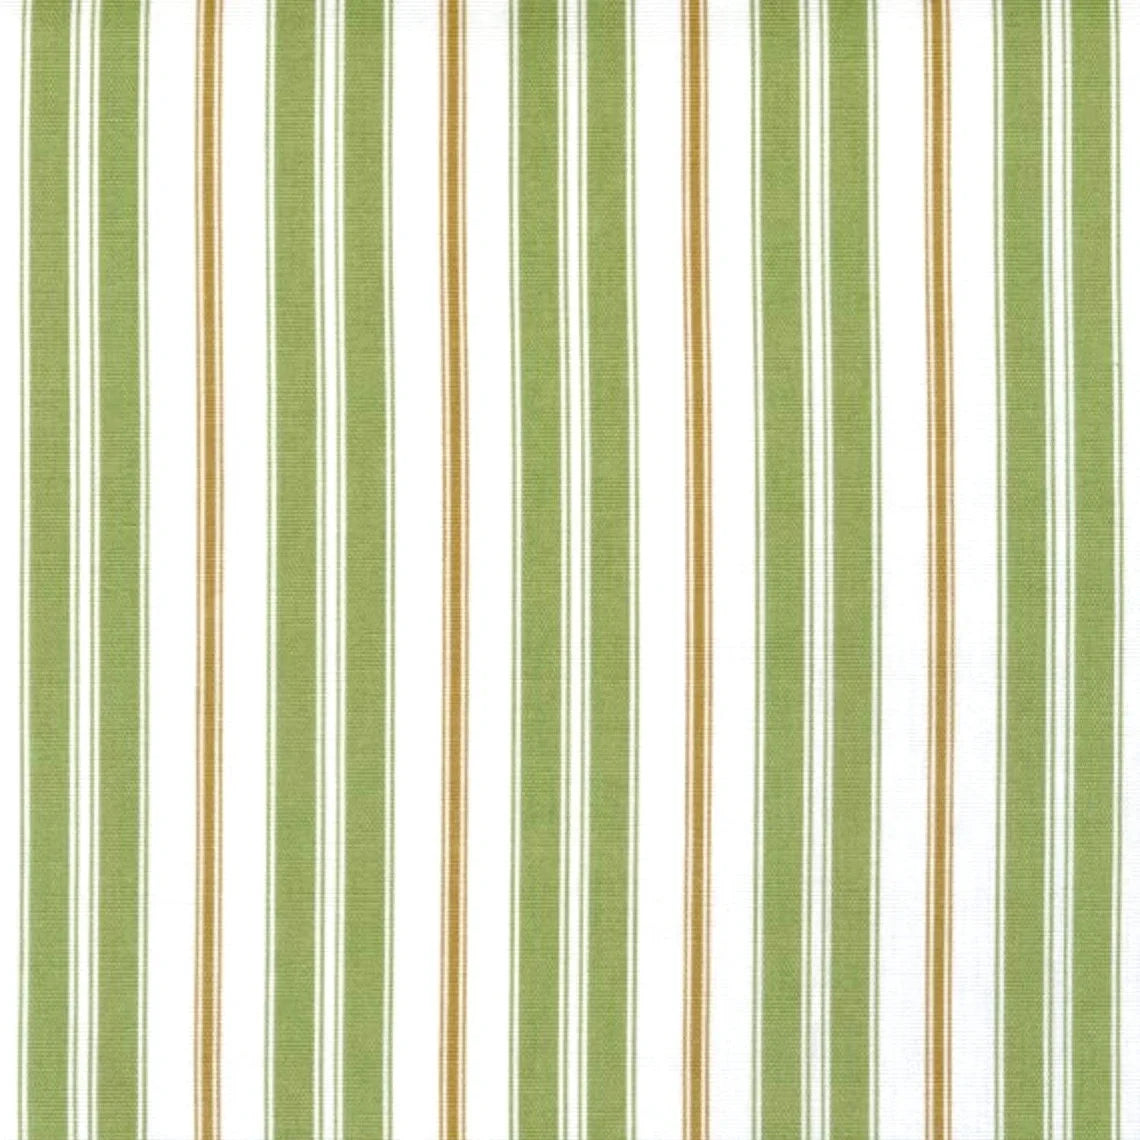 empress swag valance in newbury aloe green stripe- green, brown, white